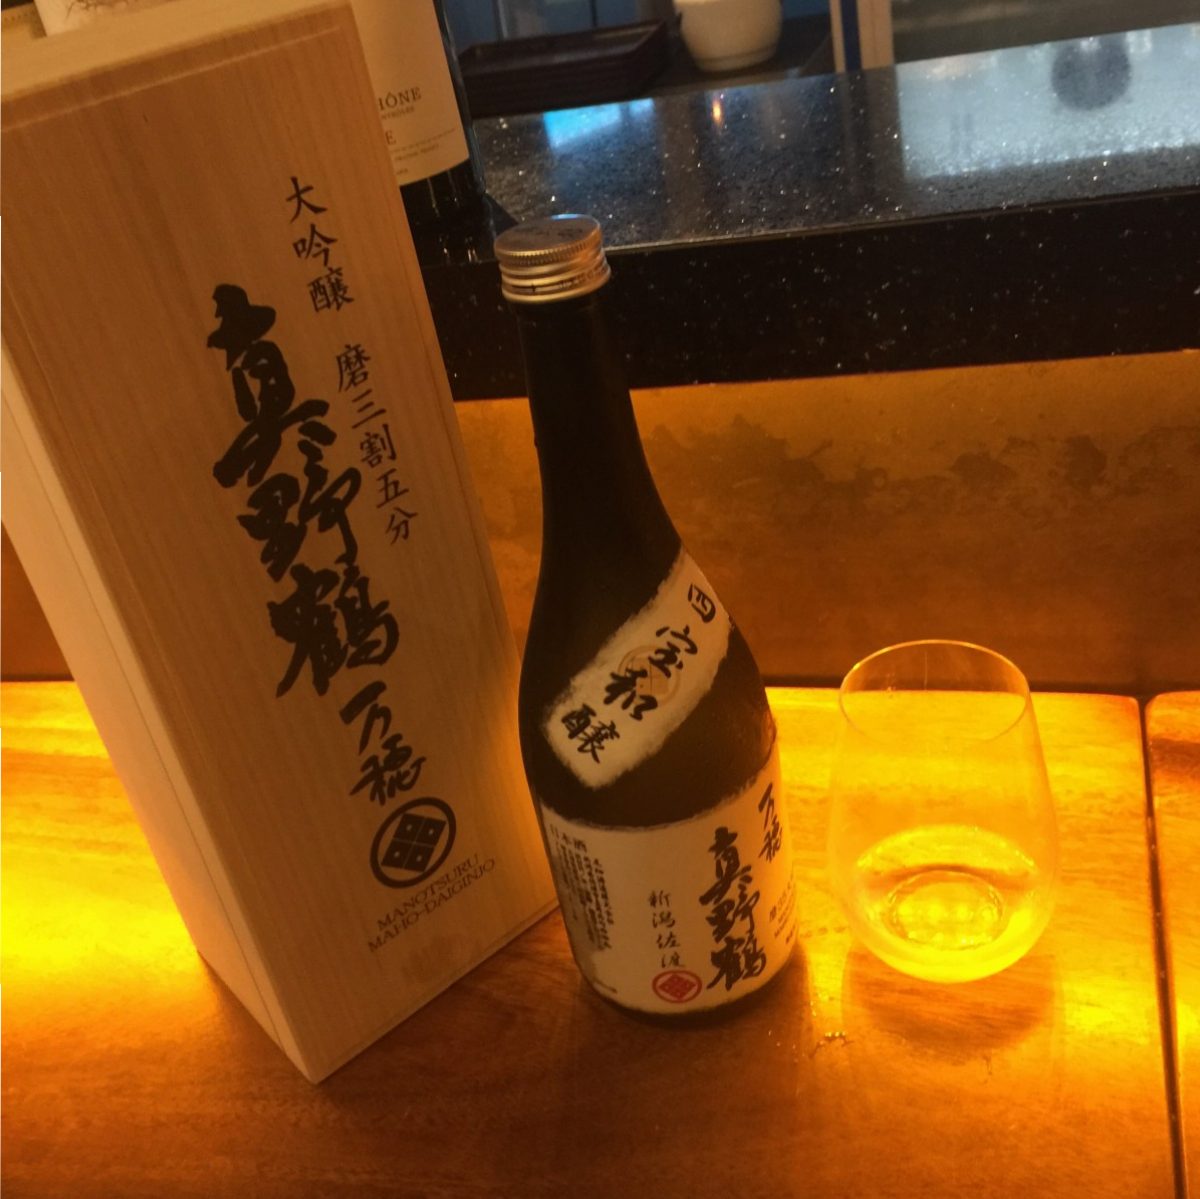 Kimoto sake subscription